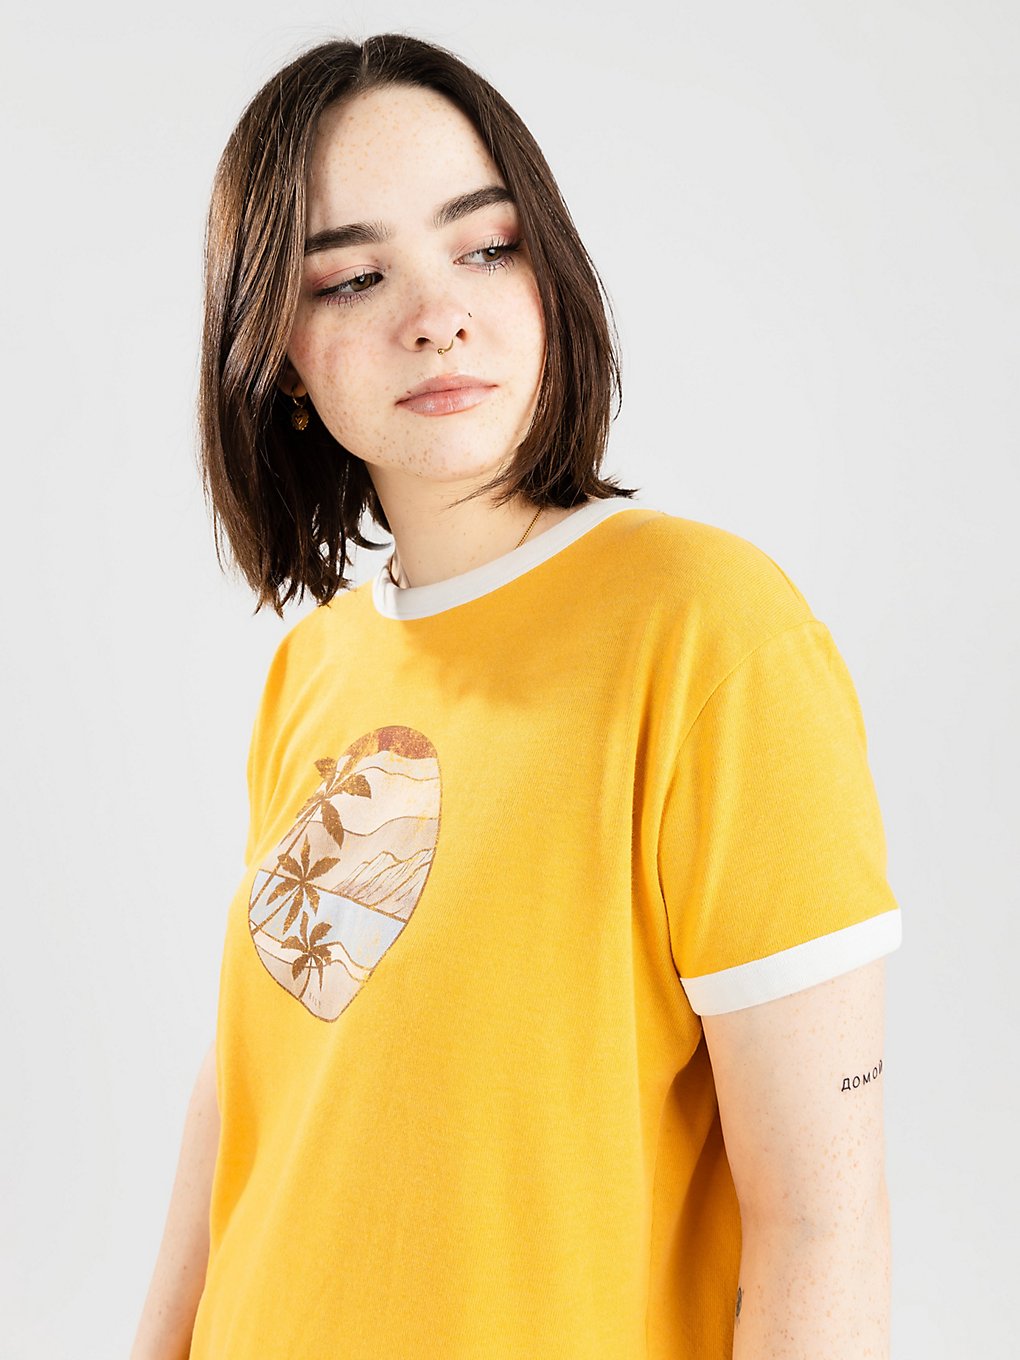 Roxy Bailing Dream A T-Shirt yolk yellow kaufen